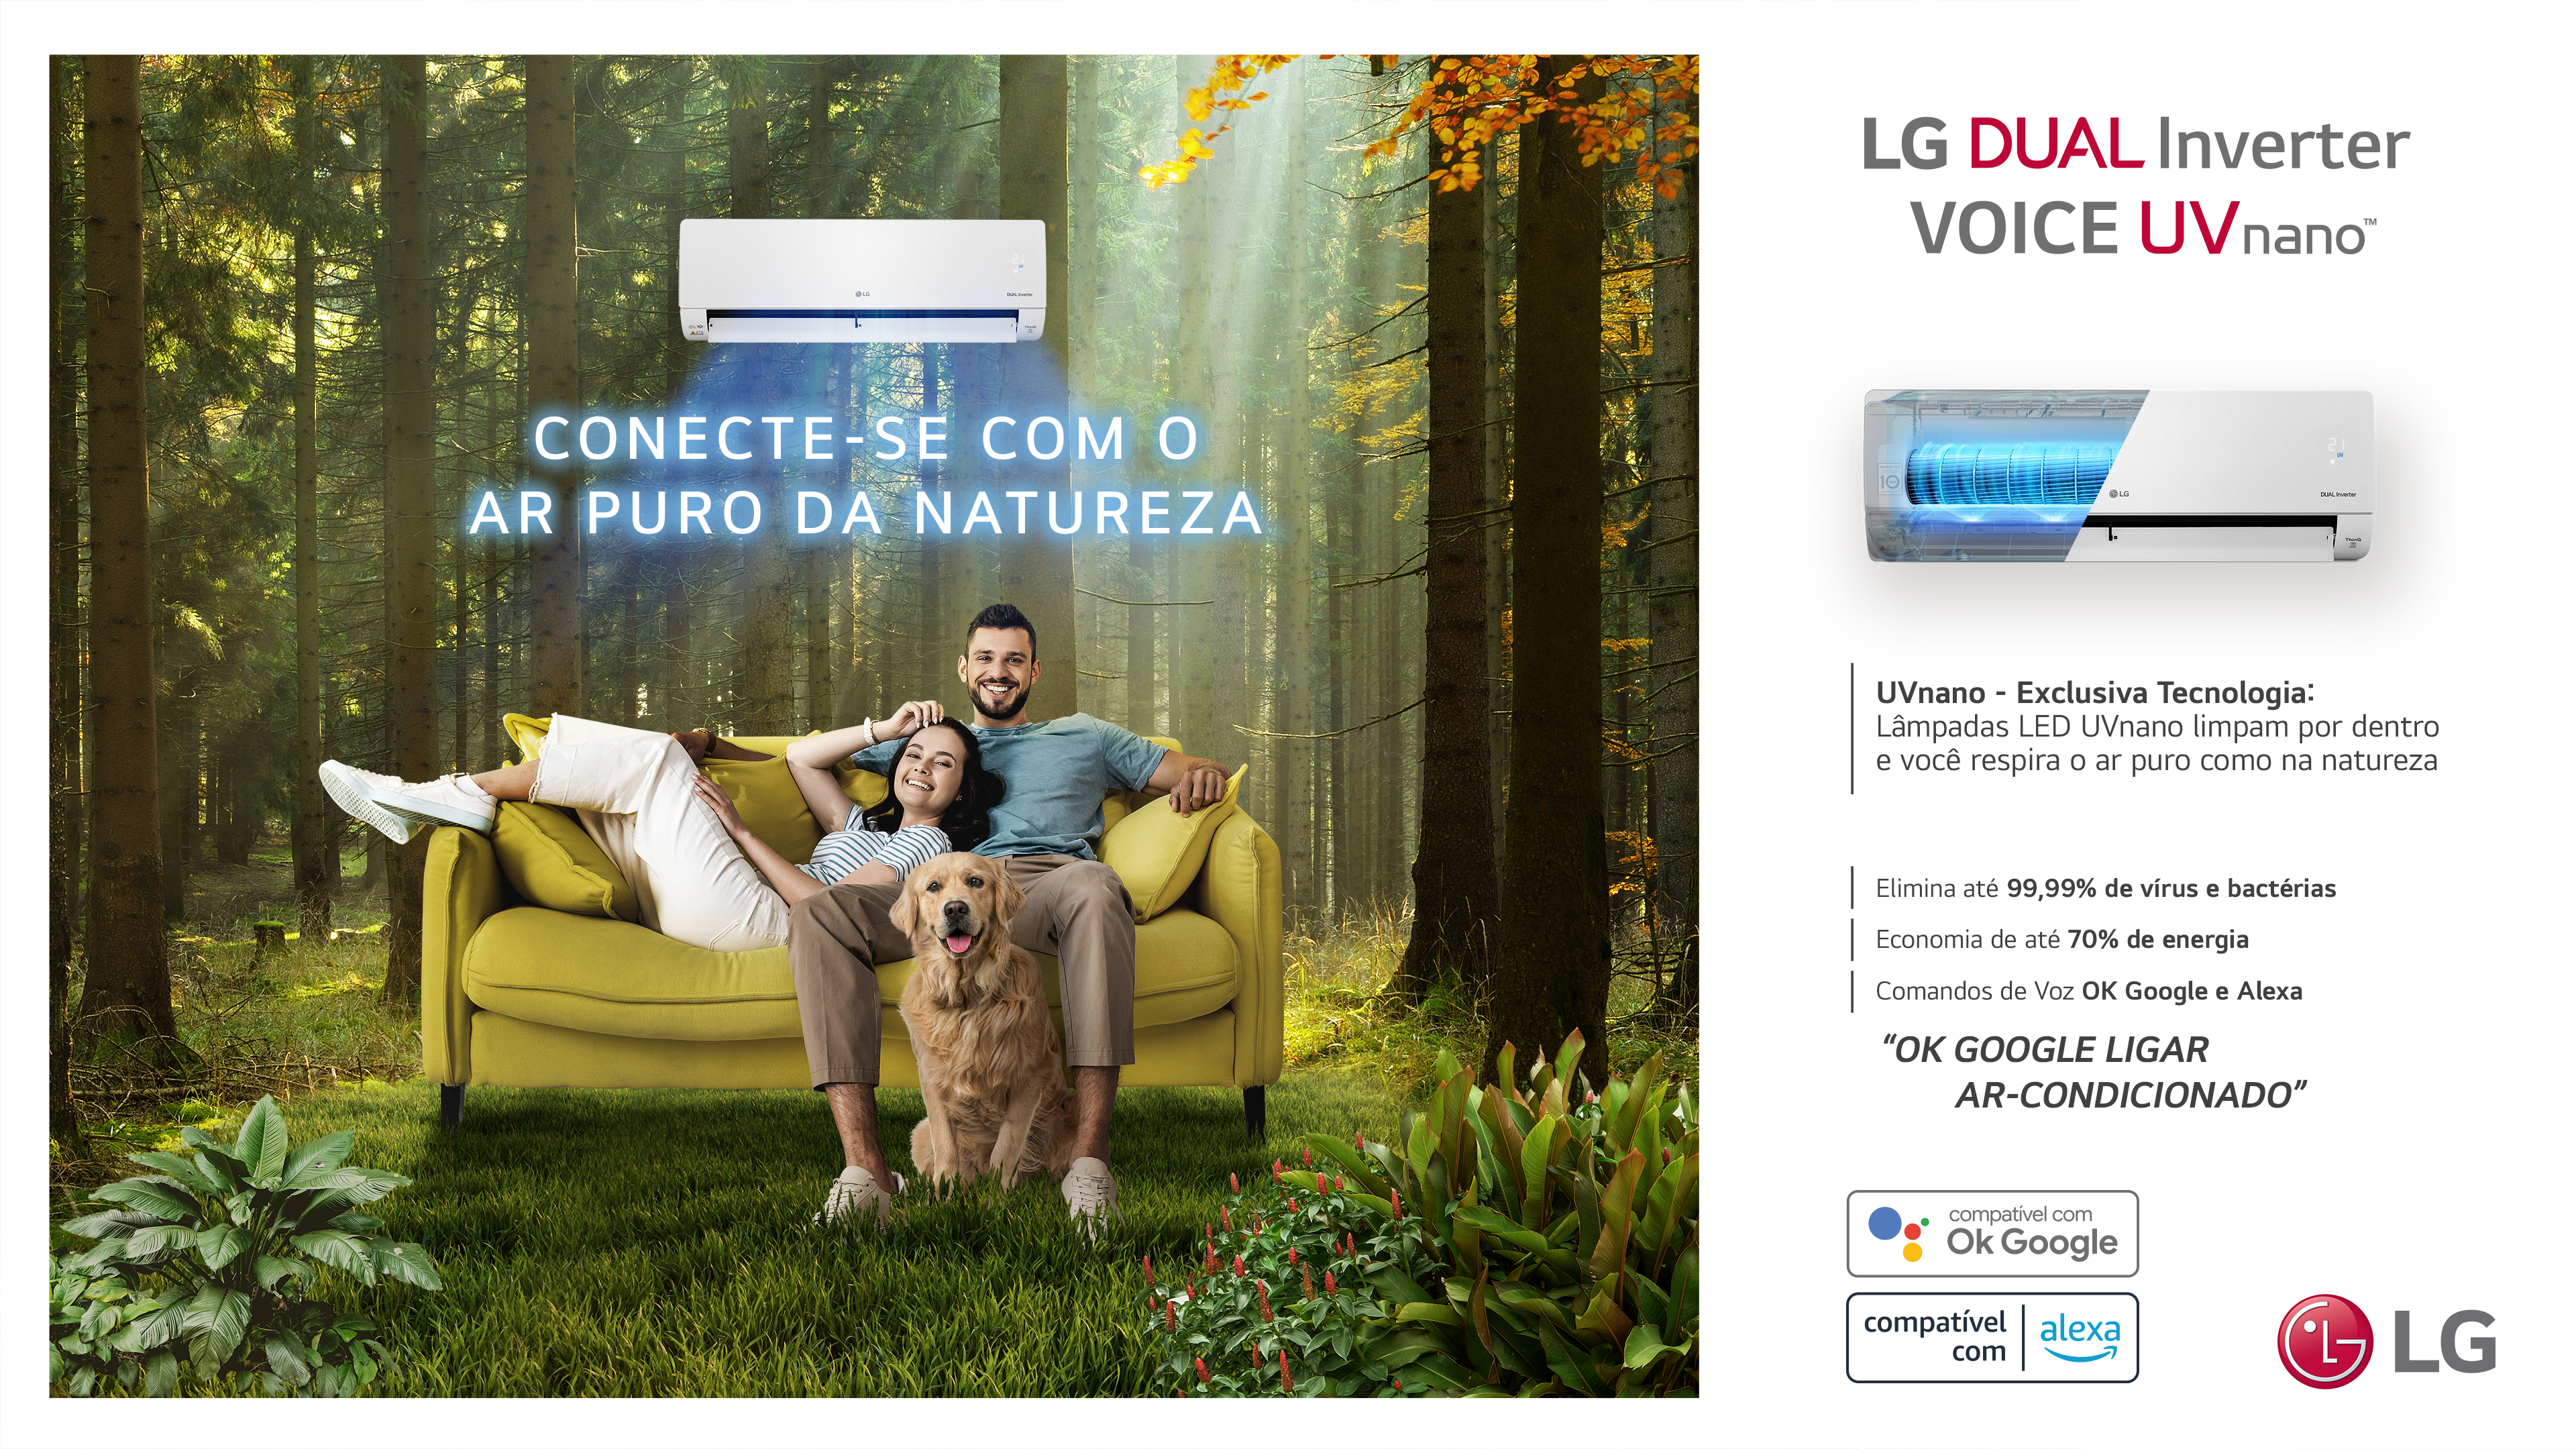 LG | Empresa lança ar-condicionado com tecnologia exclusiva Ultravioleta